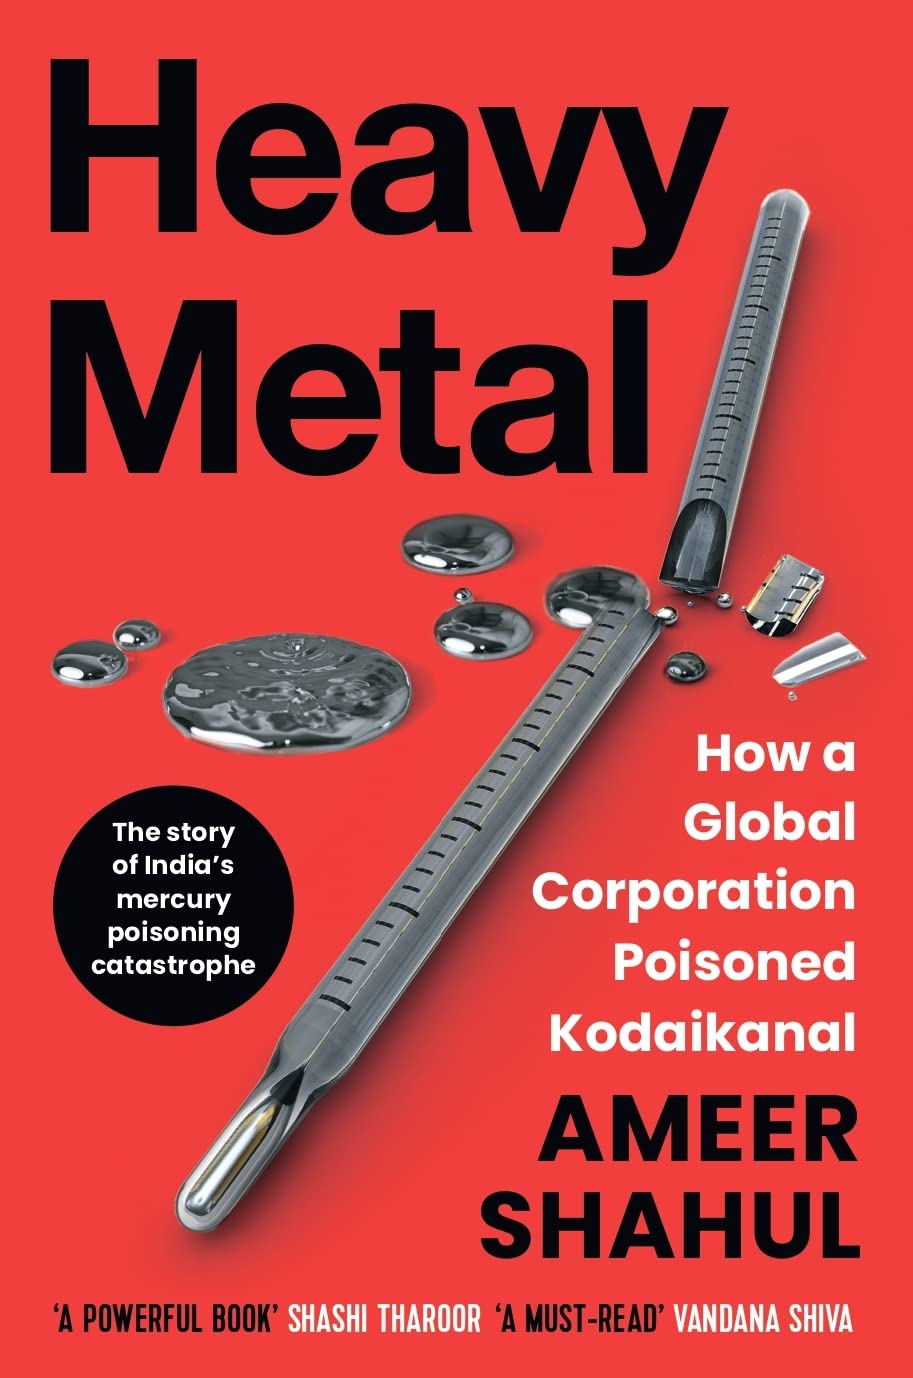 Heavy Metal: How A Global Corporation Poisoned Kodaikanal